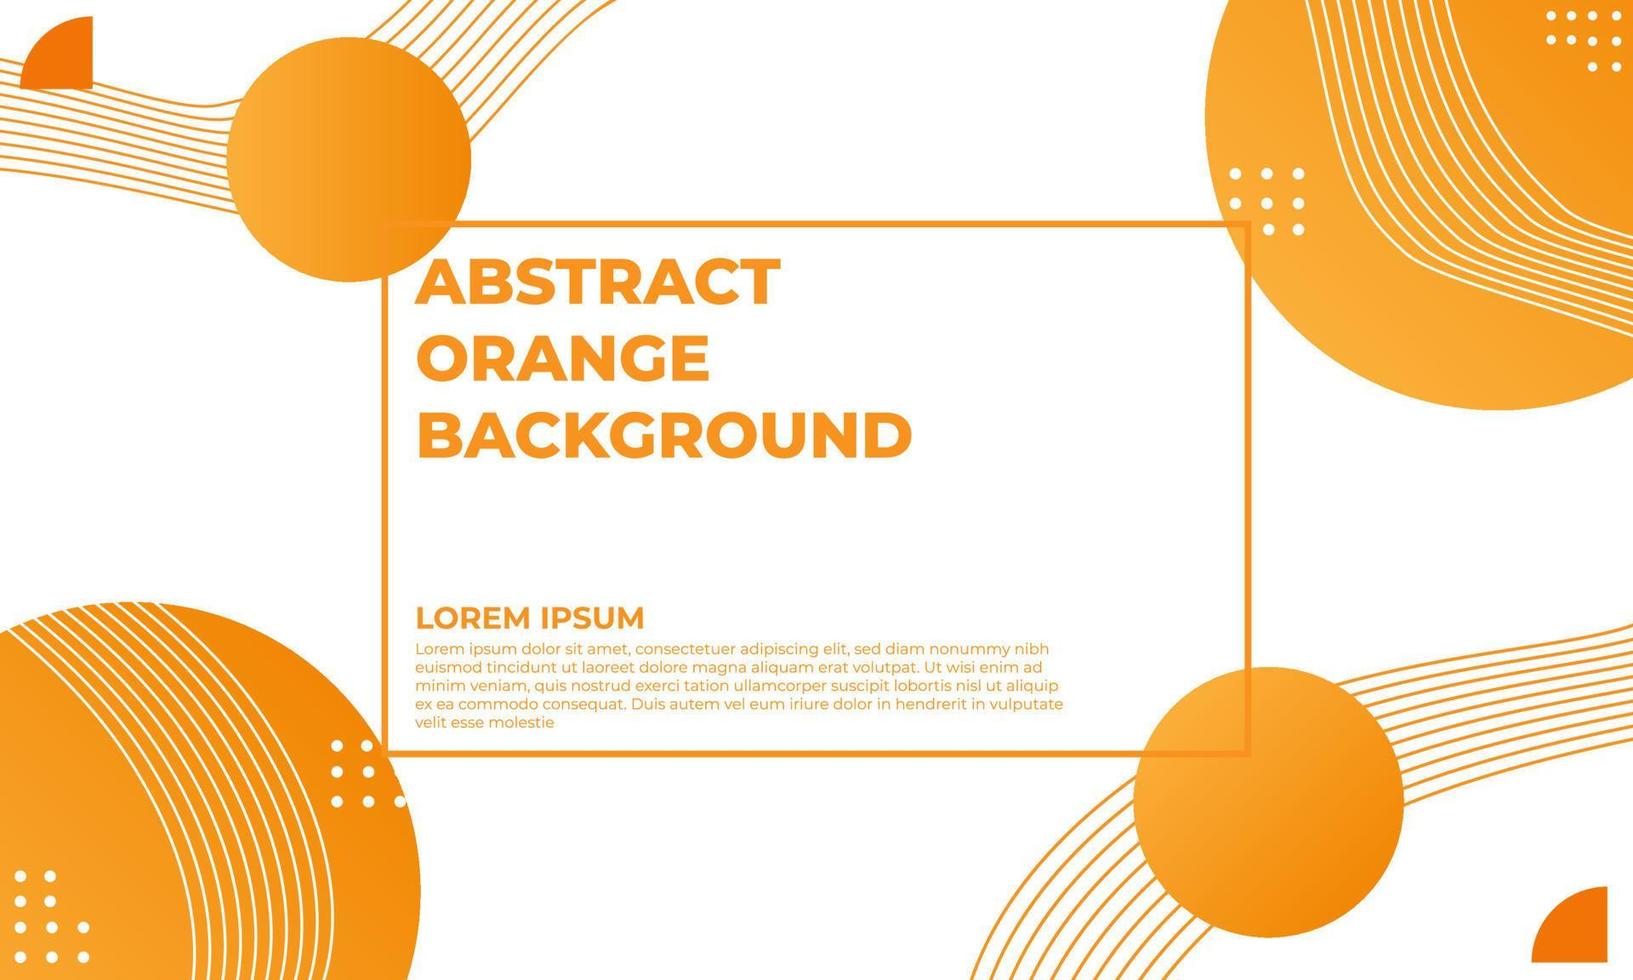 abstract orange flat geometric background design vector